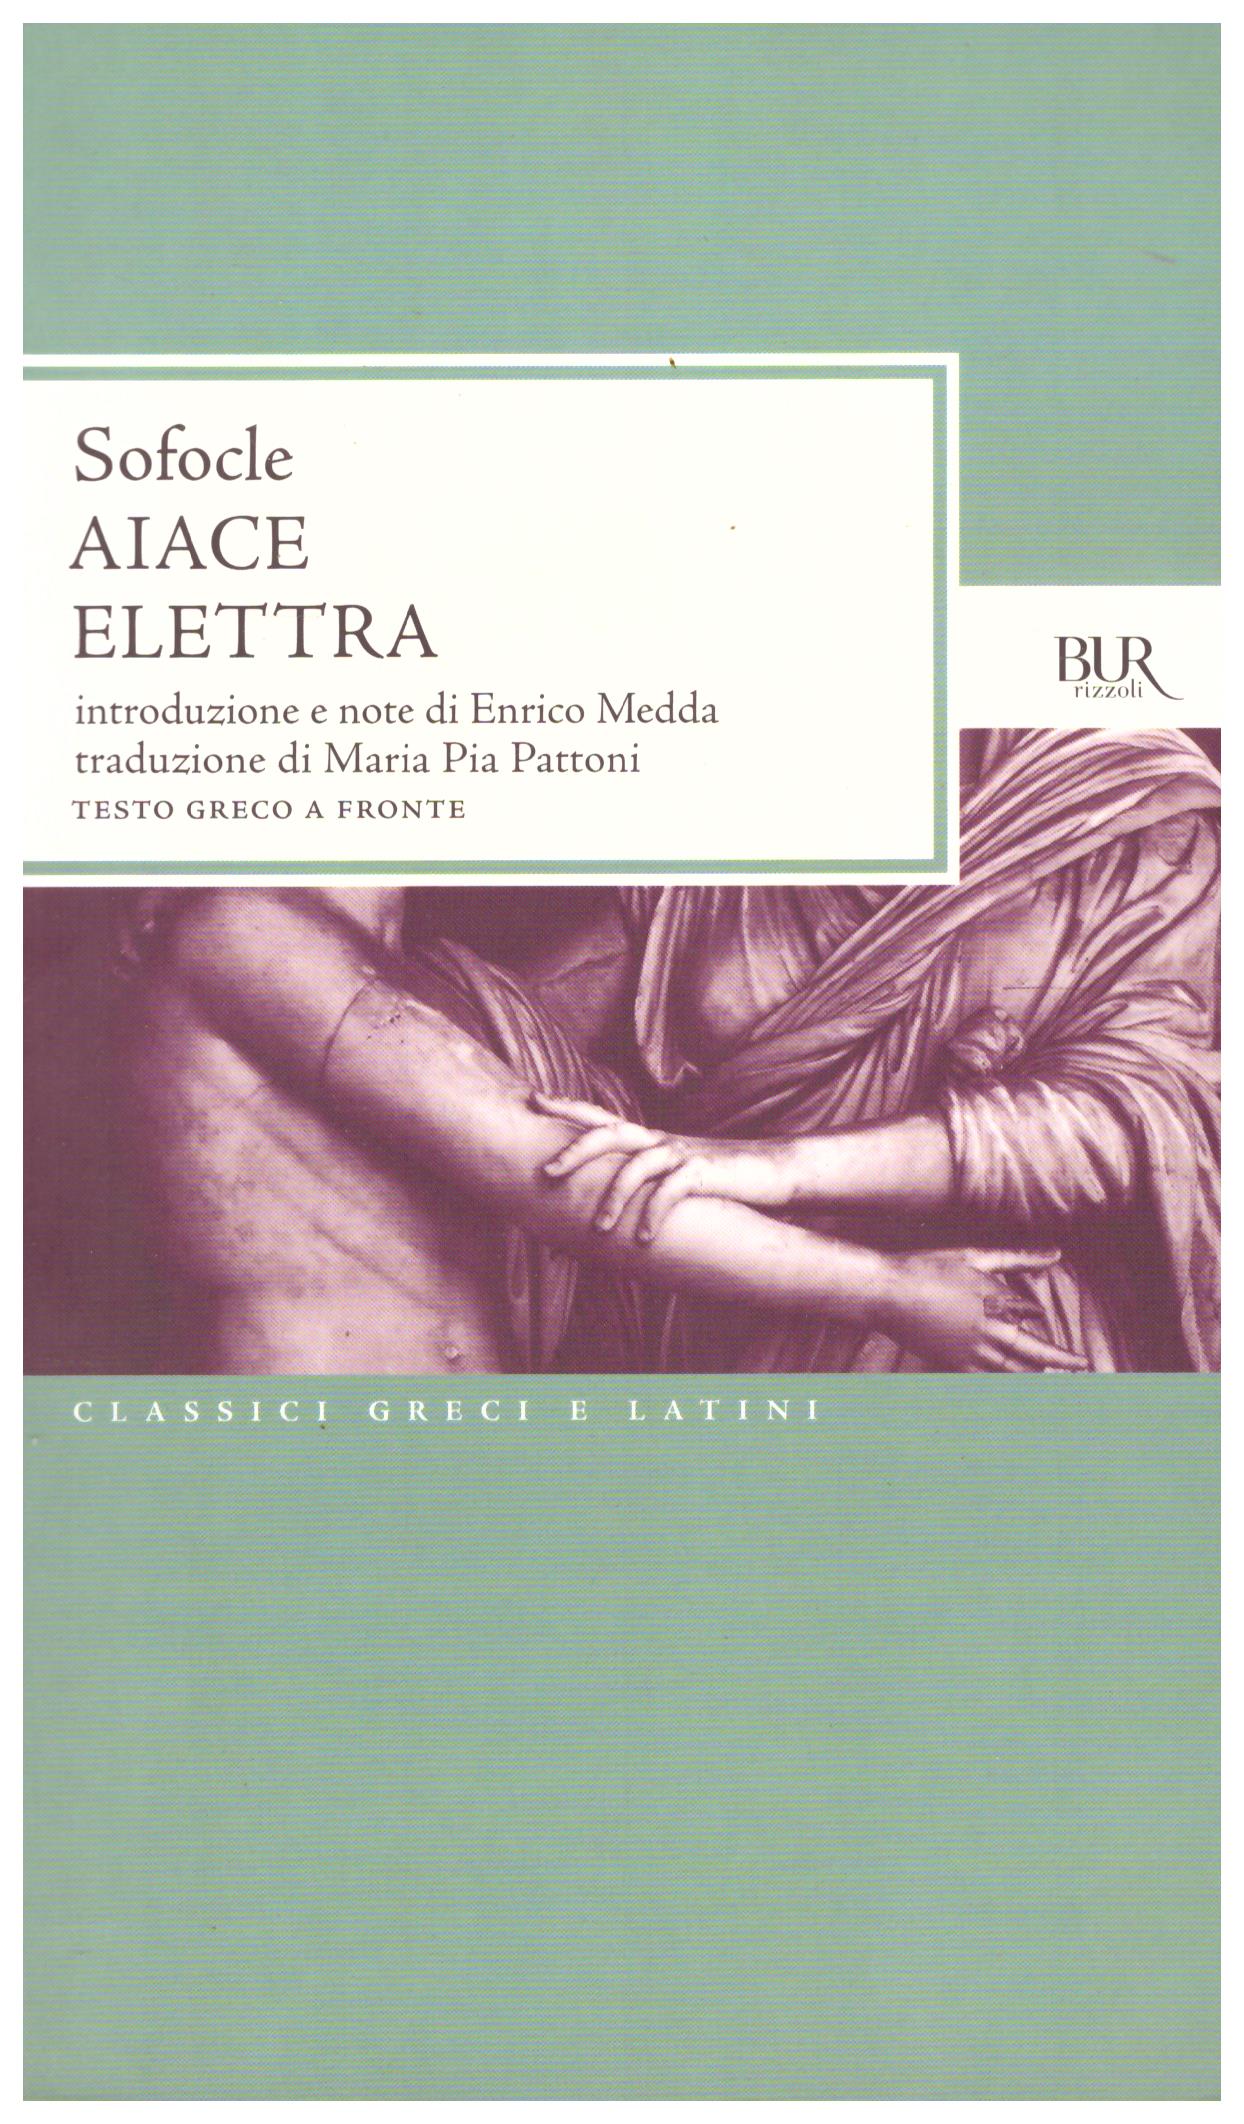 Titolo: Aiace, Electra Autore: Sofocle Editore: Bur, 2010